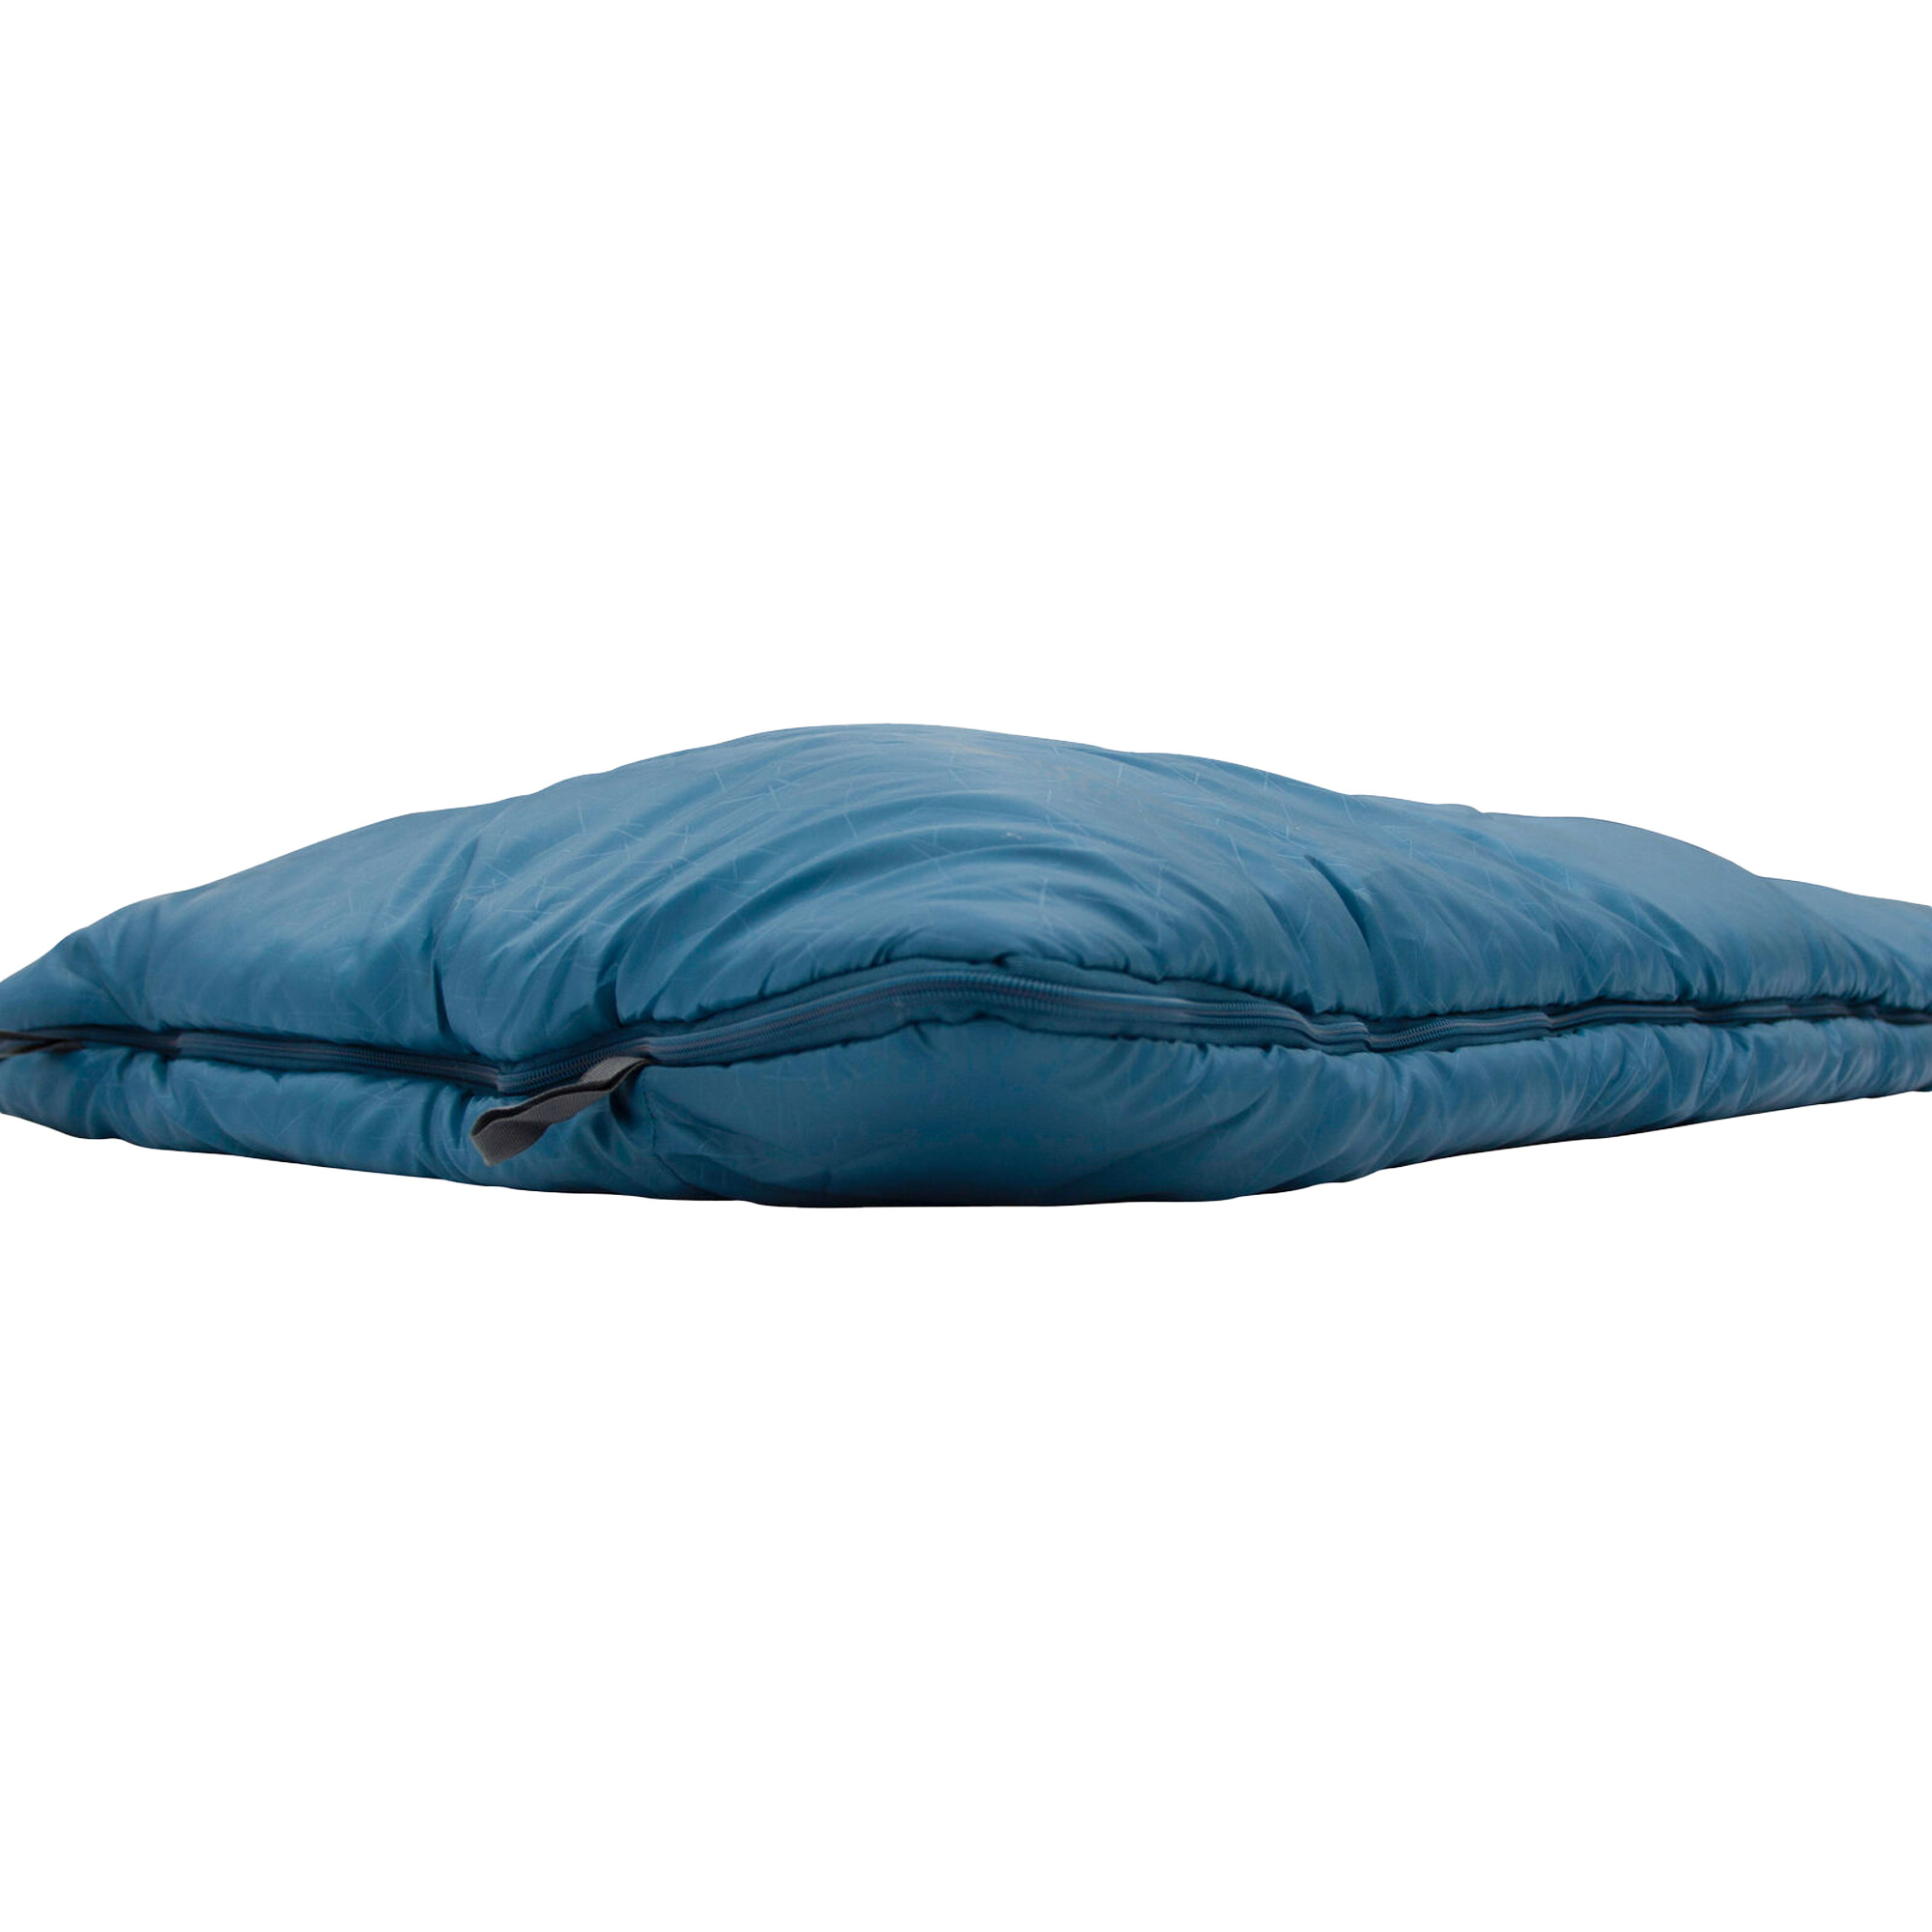 Vango Evolve Superwarm Single Camping Sleeping Bag